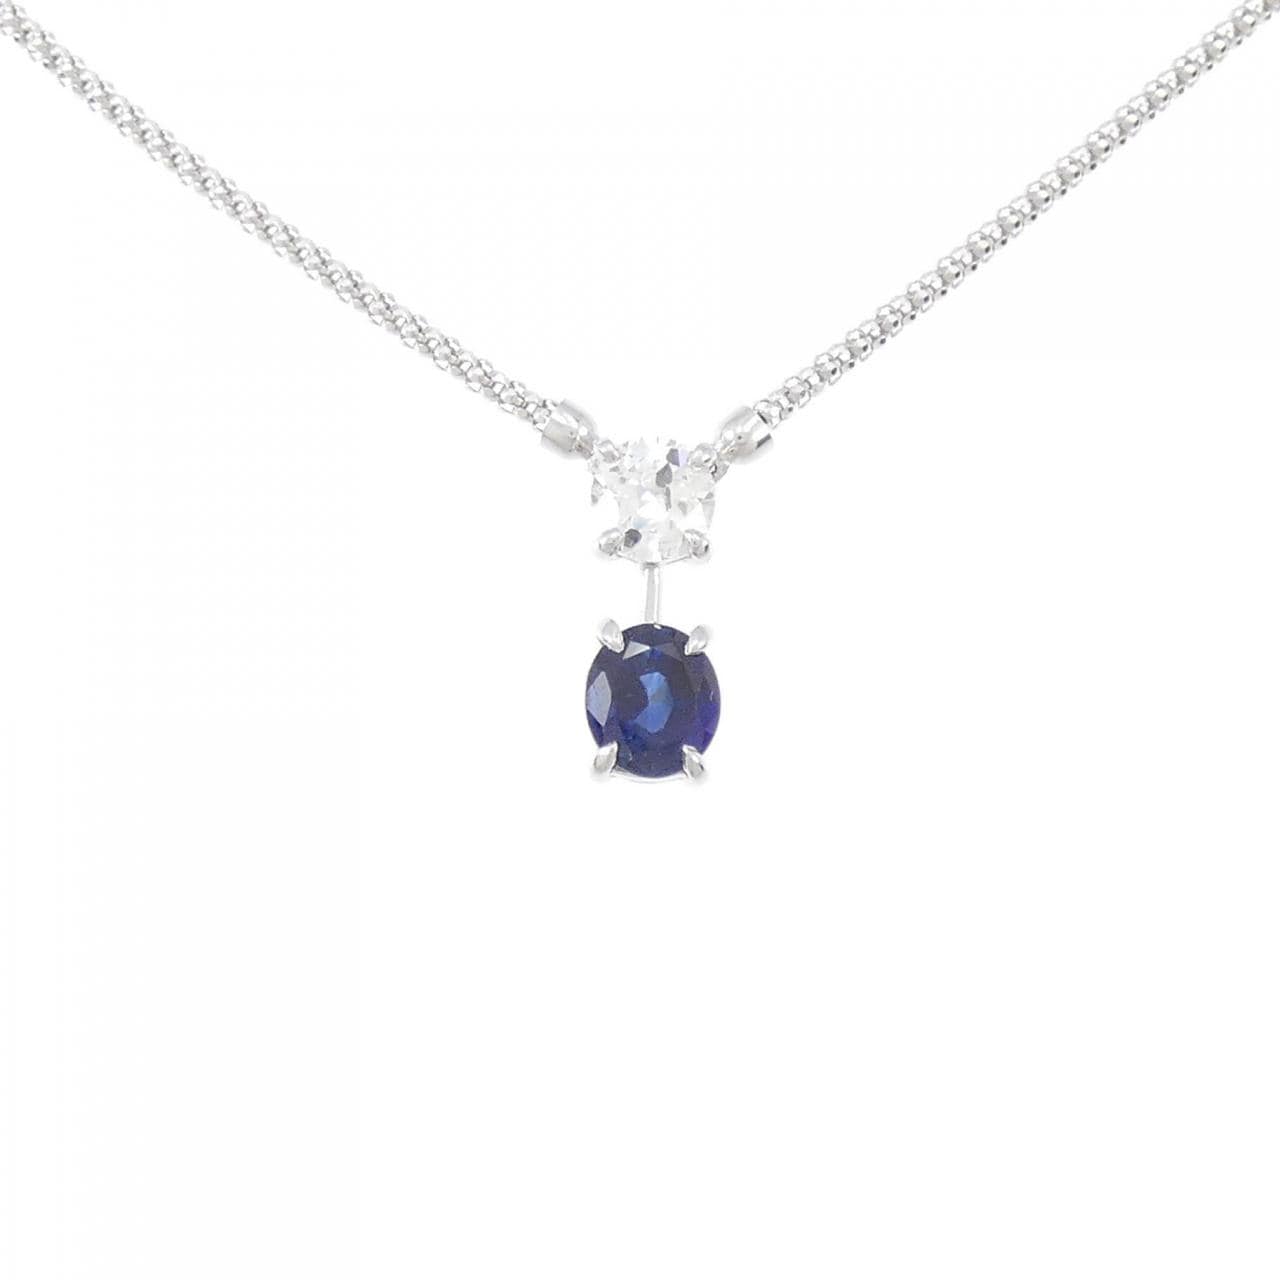 K18WG sapphire necklace 0.78CT